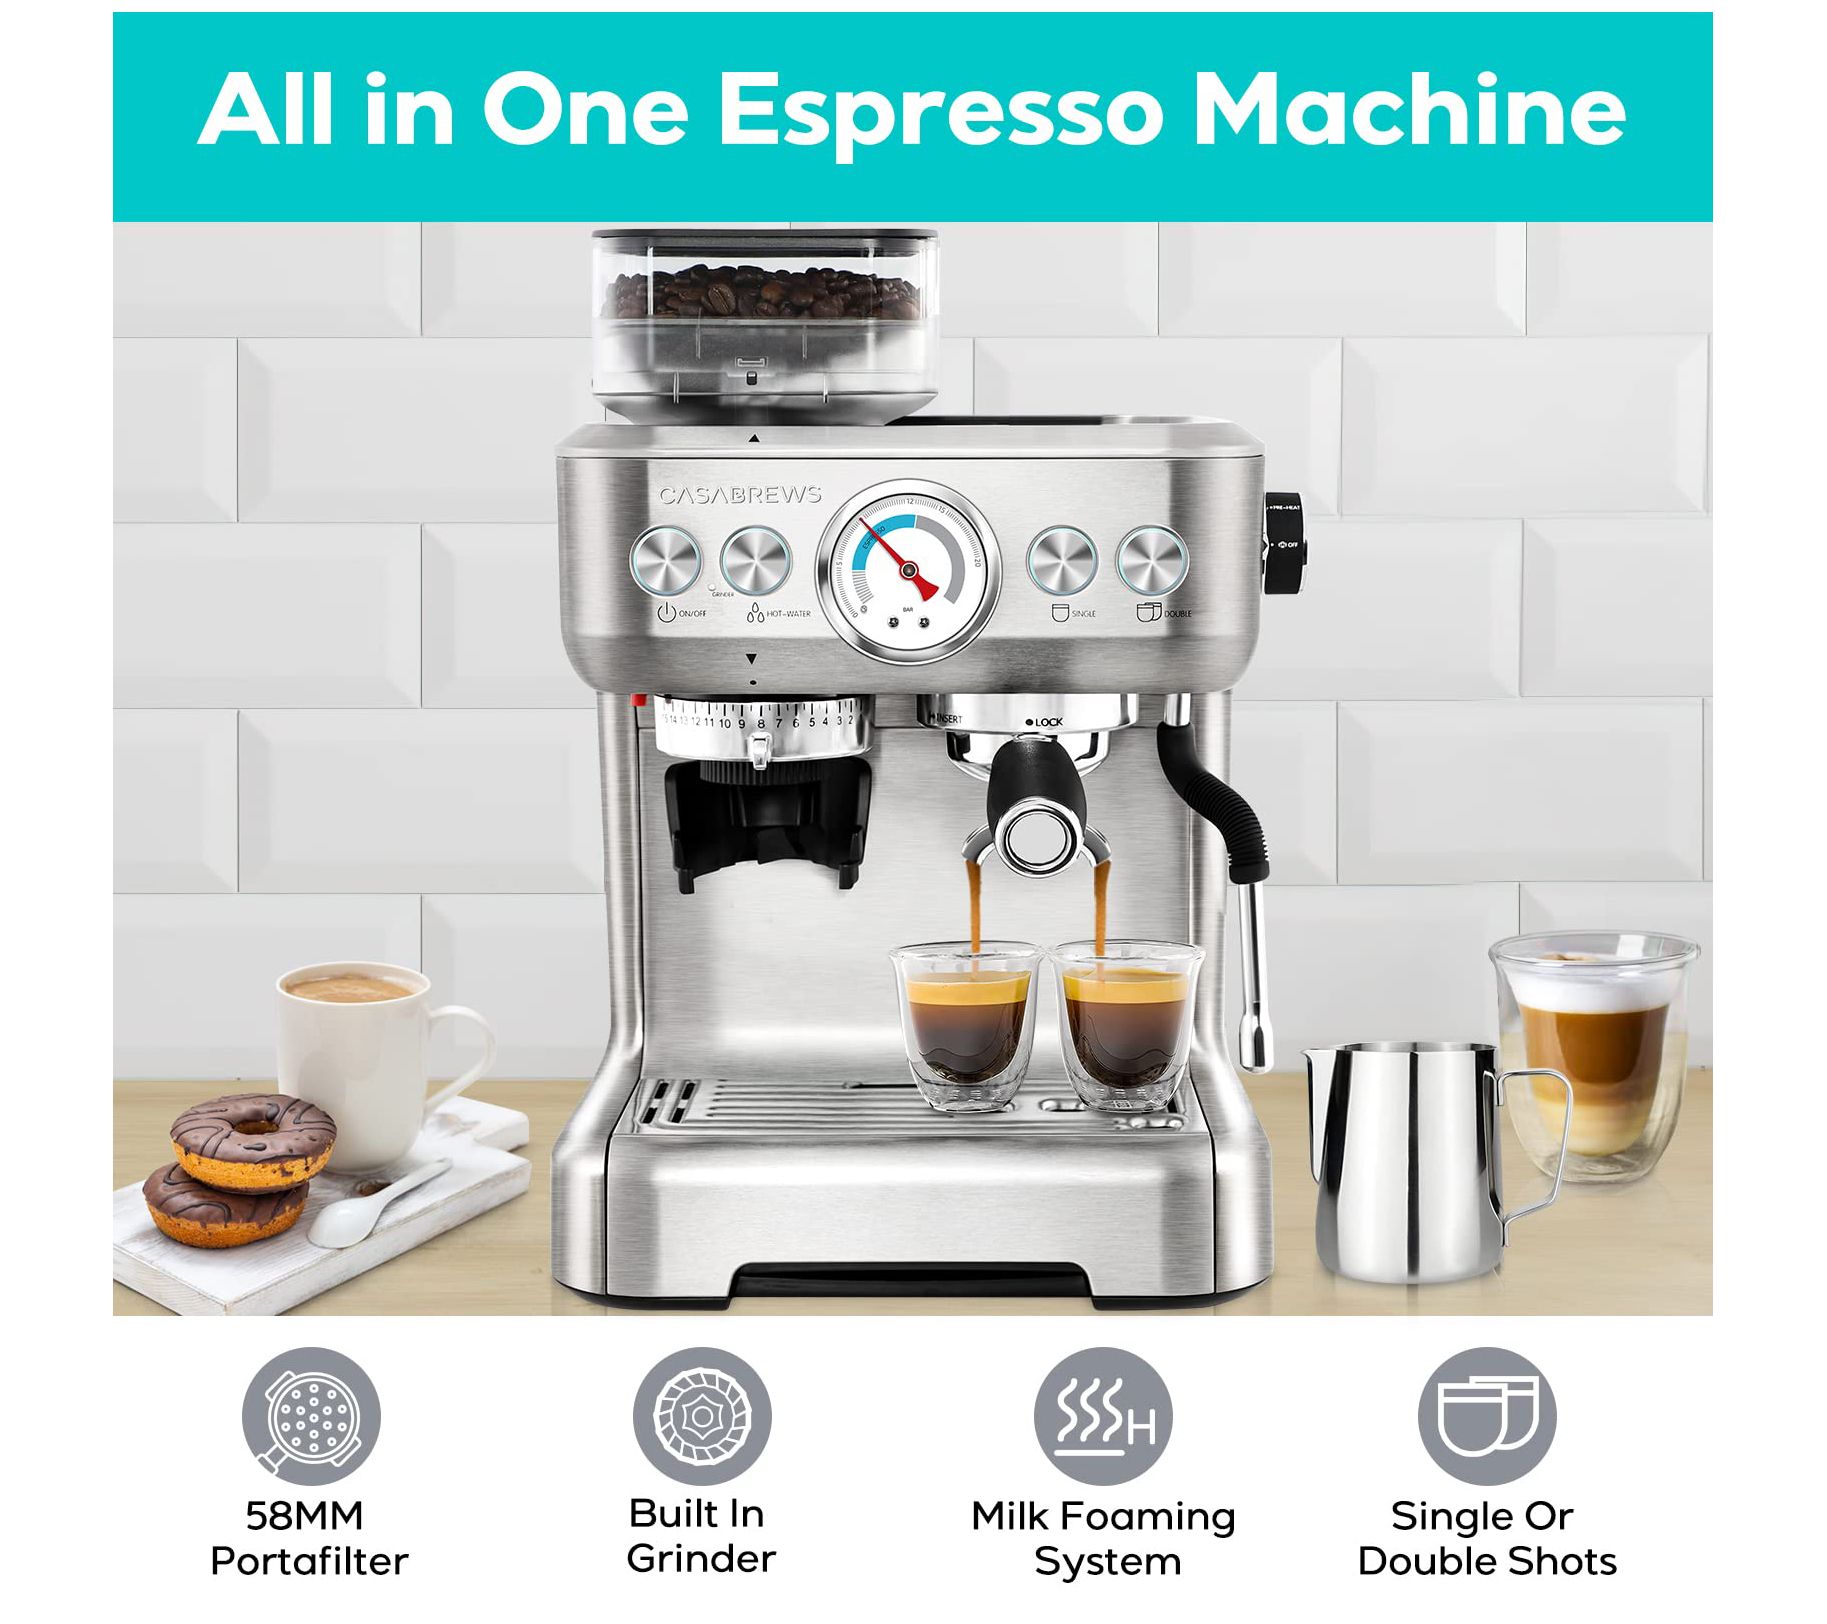 CASABREWS All-in-One Espresso Machine with Grinder - QVC.com